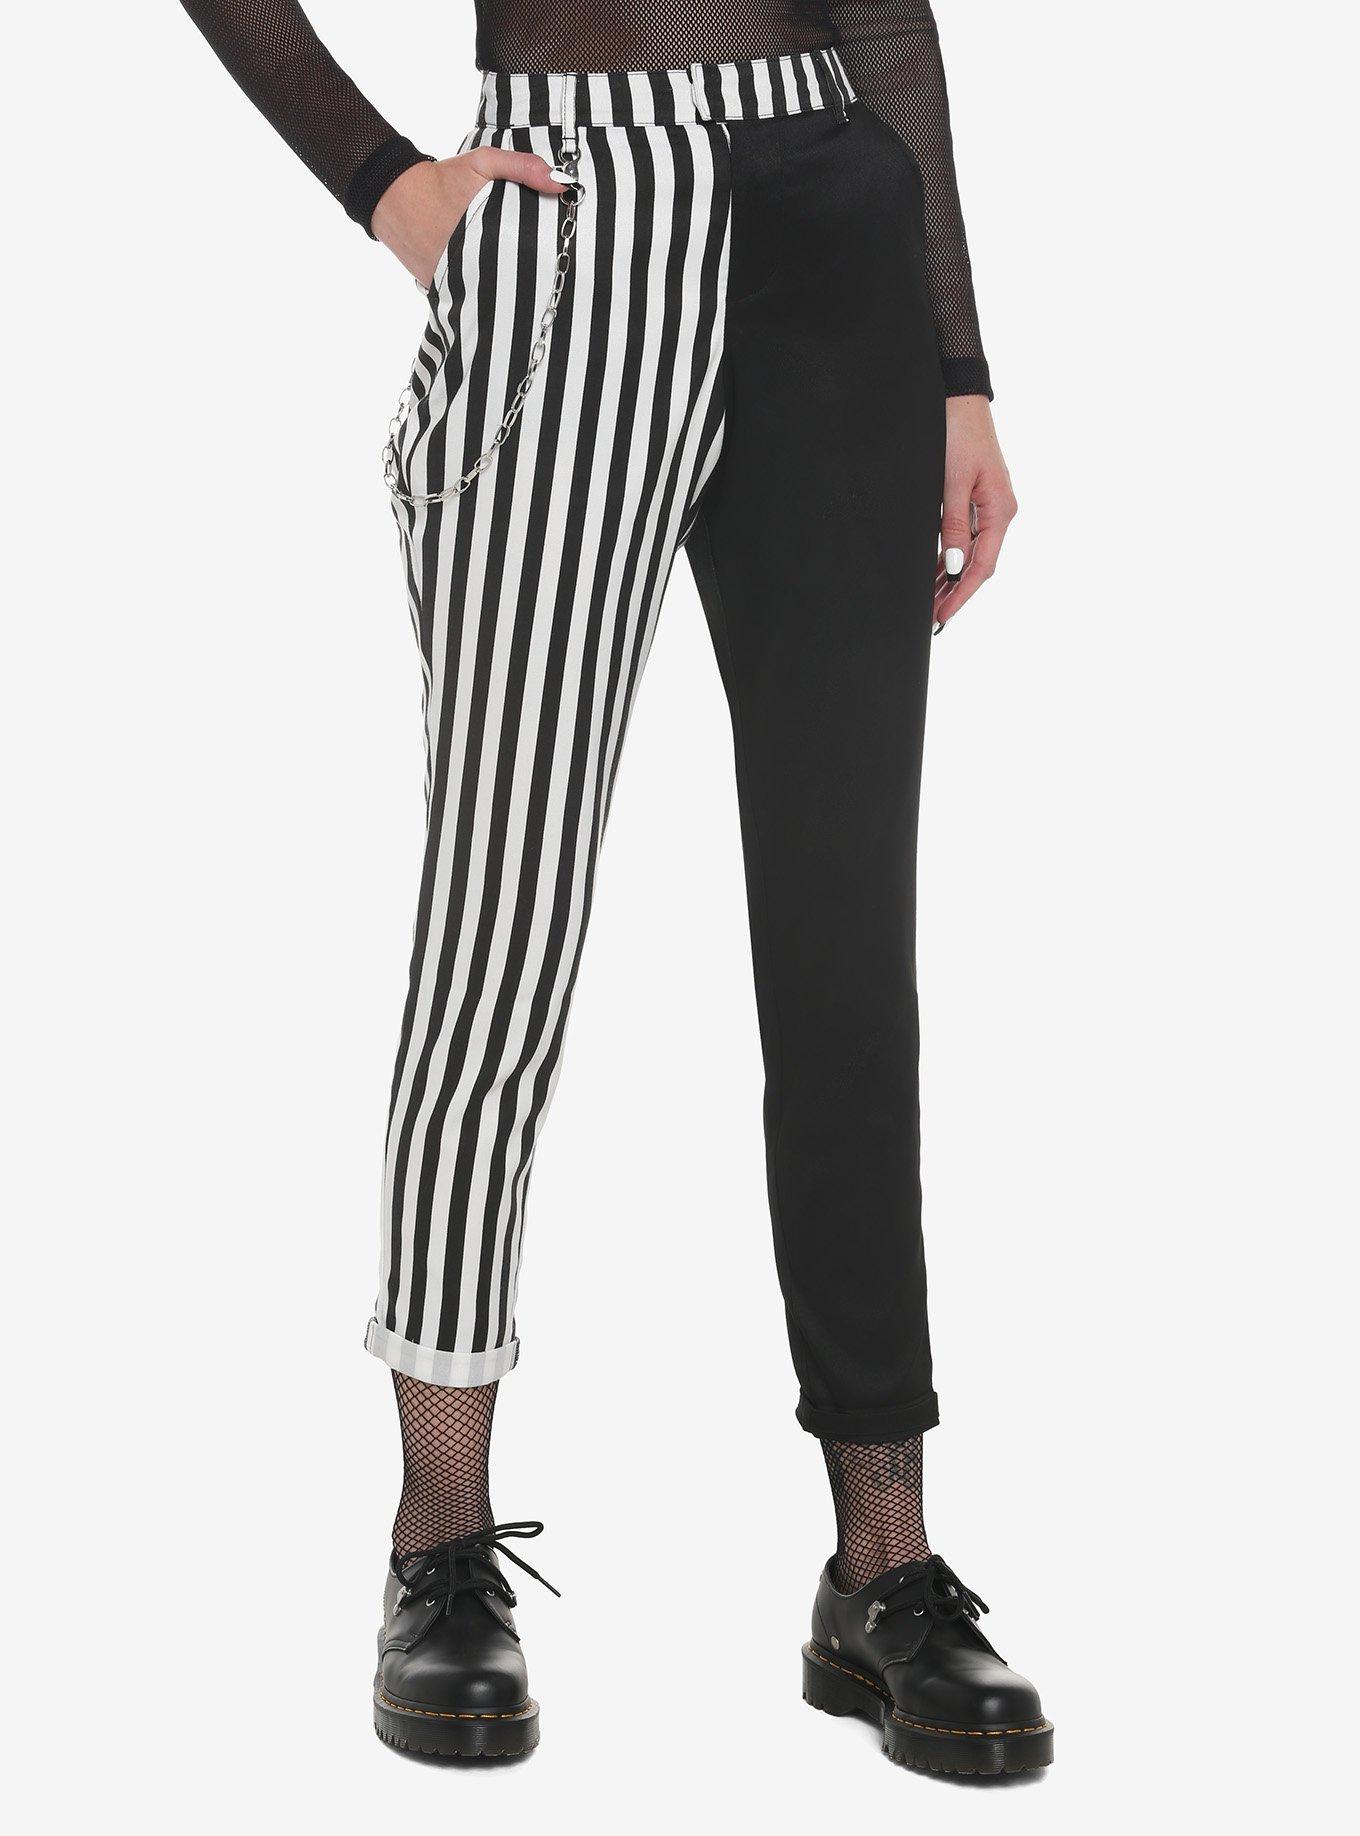 Stripe Up!!  Black and white striped pants, Black and white pants, Black  and white striped pants outfit